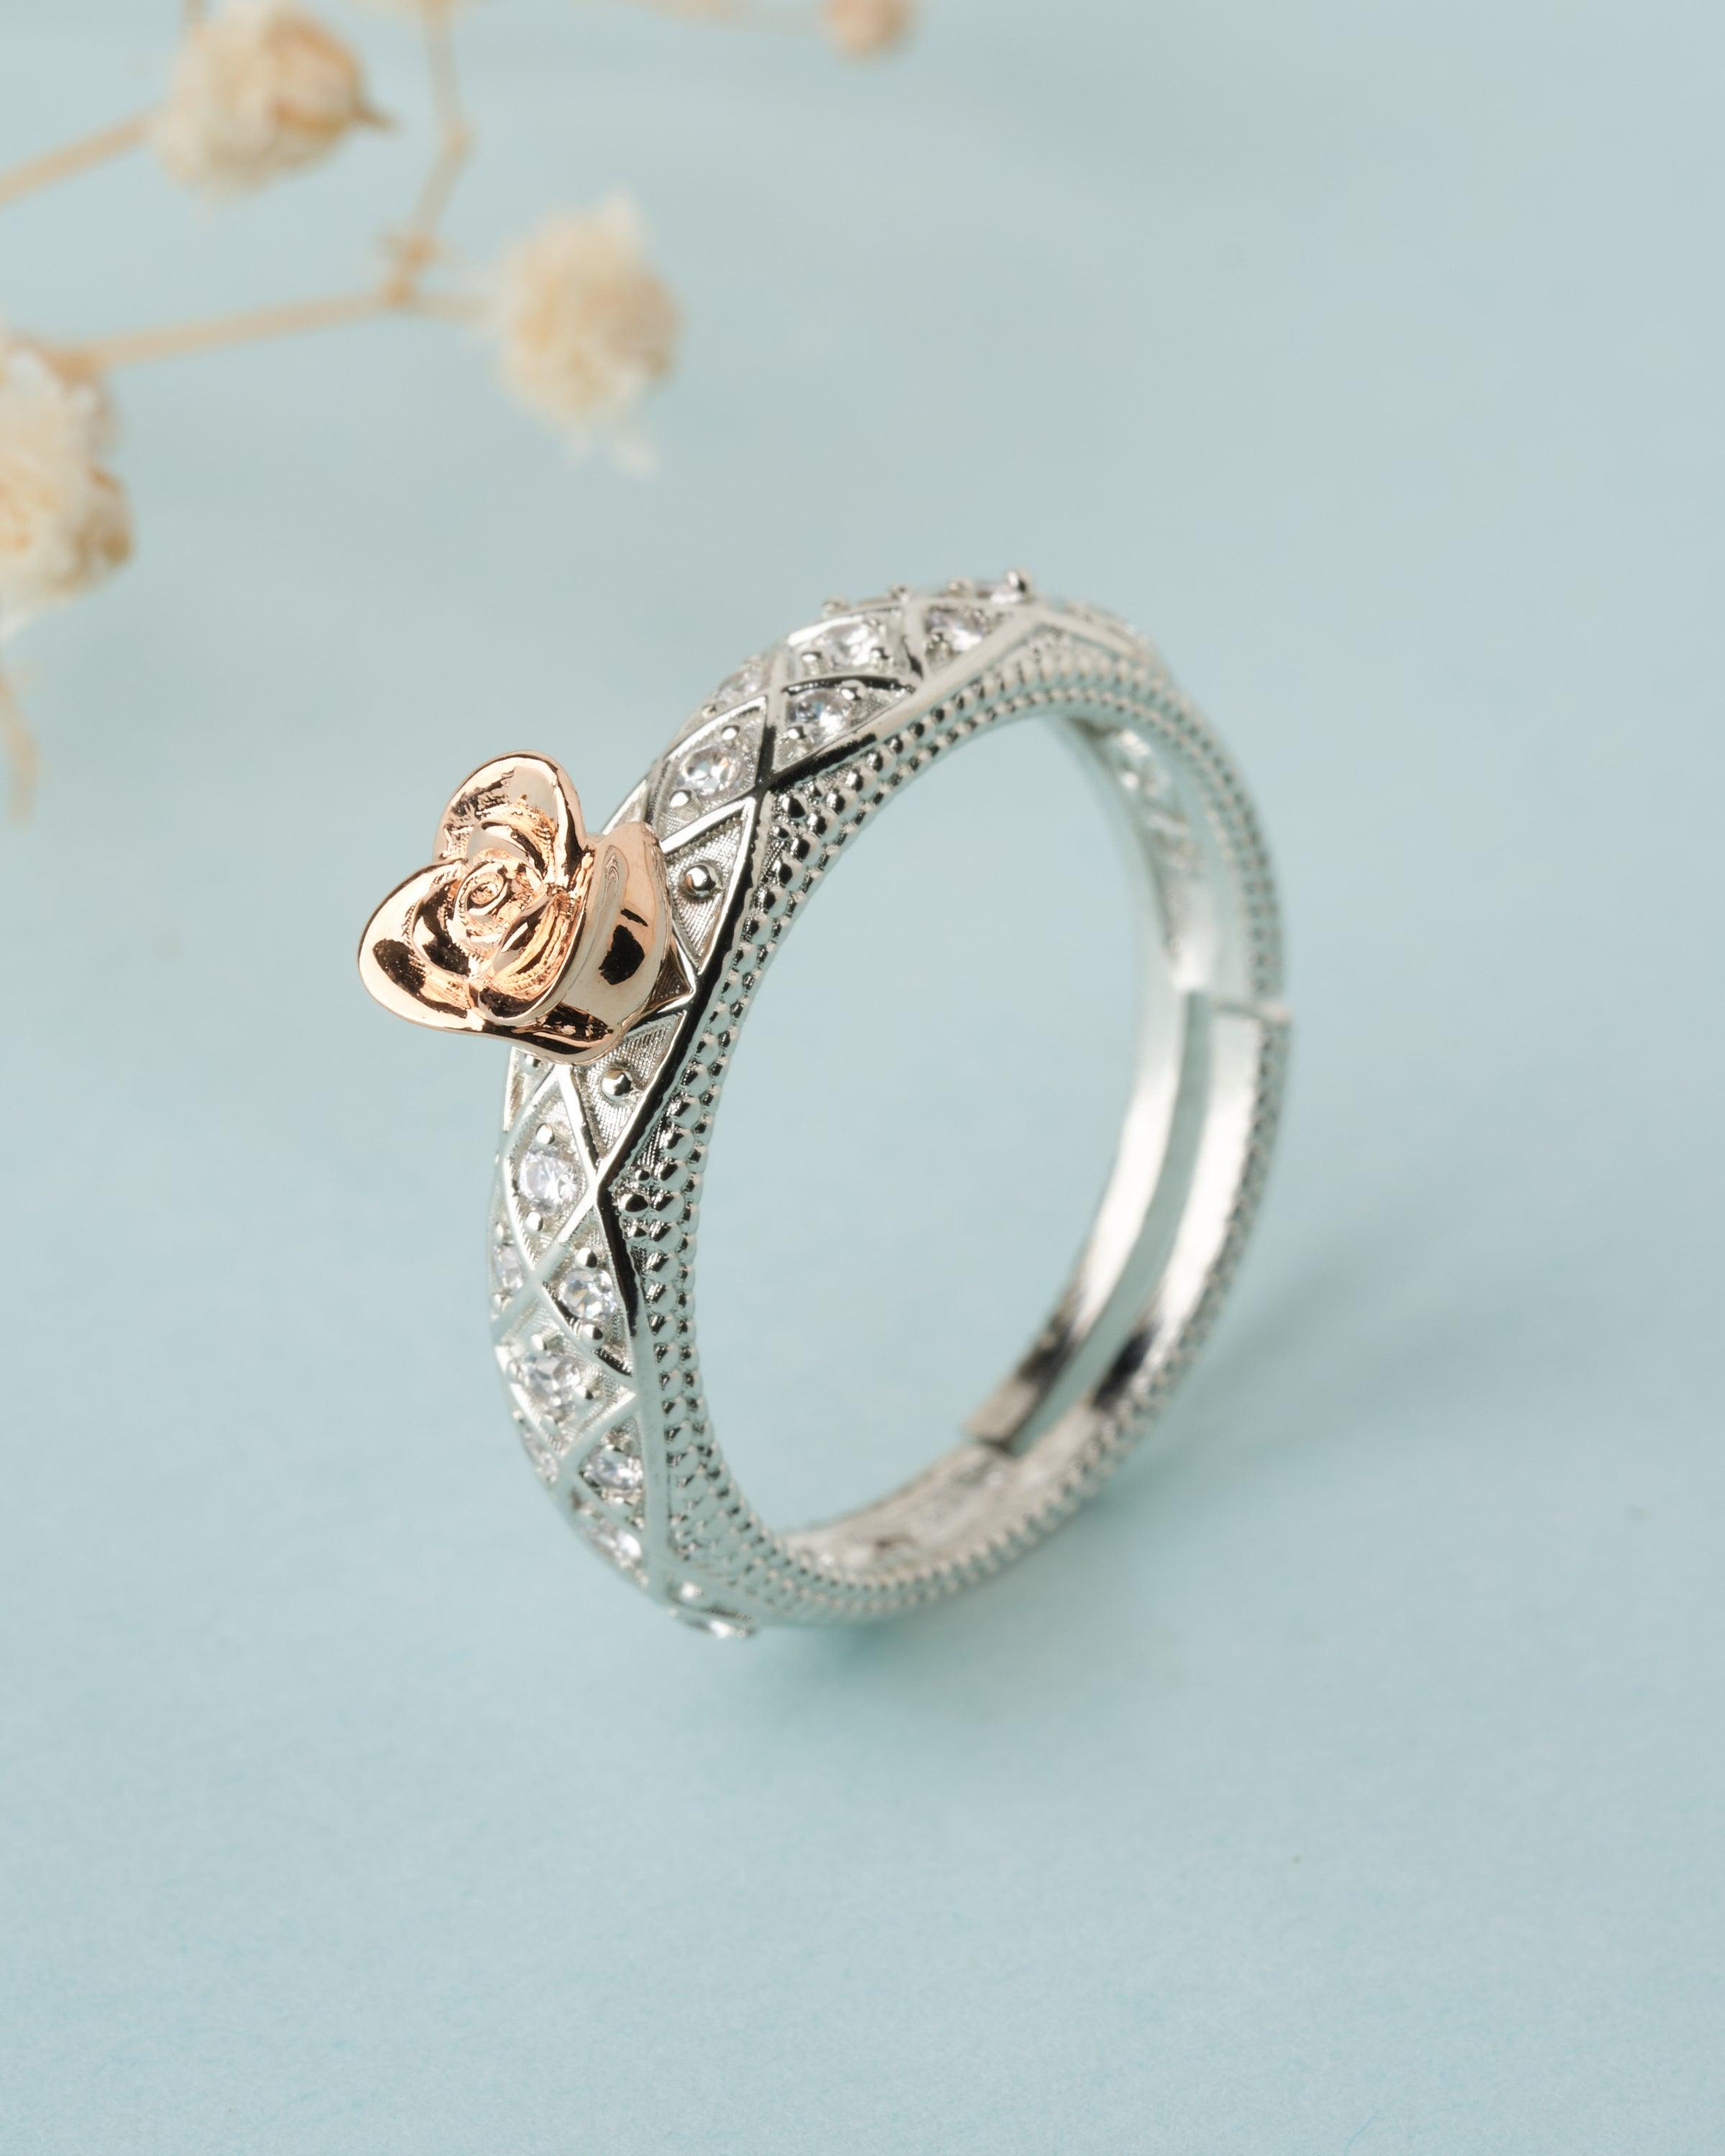 20 Best Rose Gold Engagement Rings on Trend - Elegantweddinginvites.com  Blog | Trending engagement rings, Round diamond wedding rings, Beautiful  rose gold engagement rings